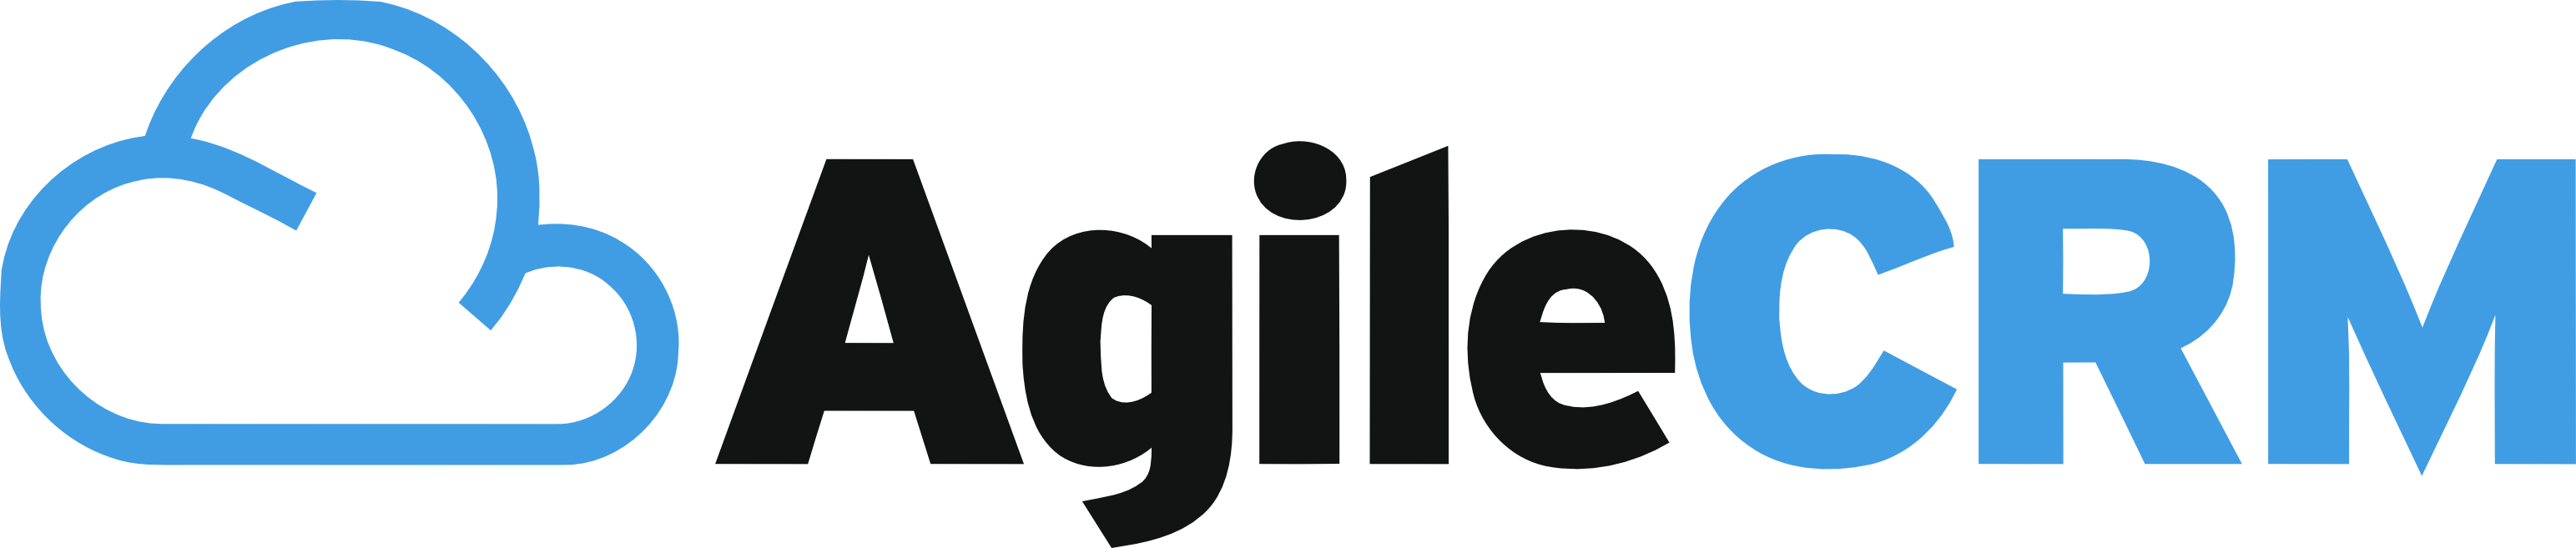 agilecrm-logo-icon-png